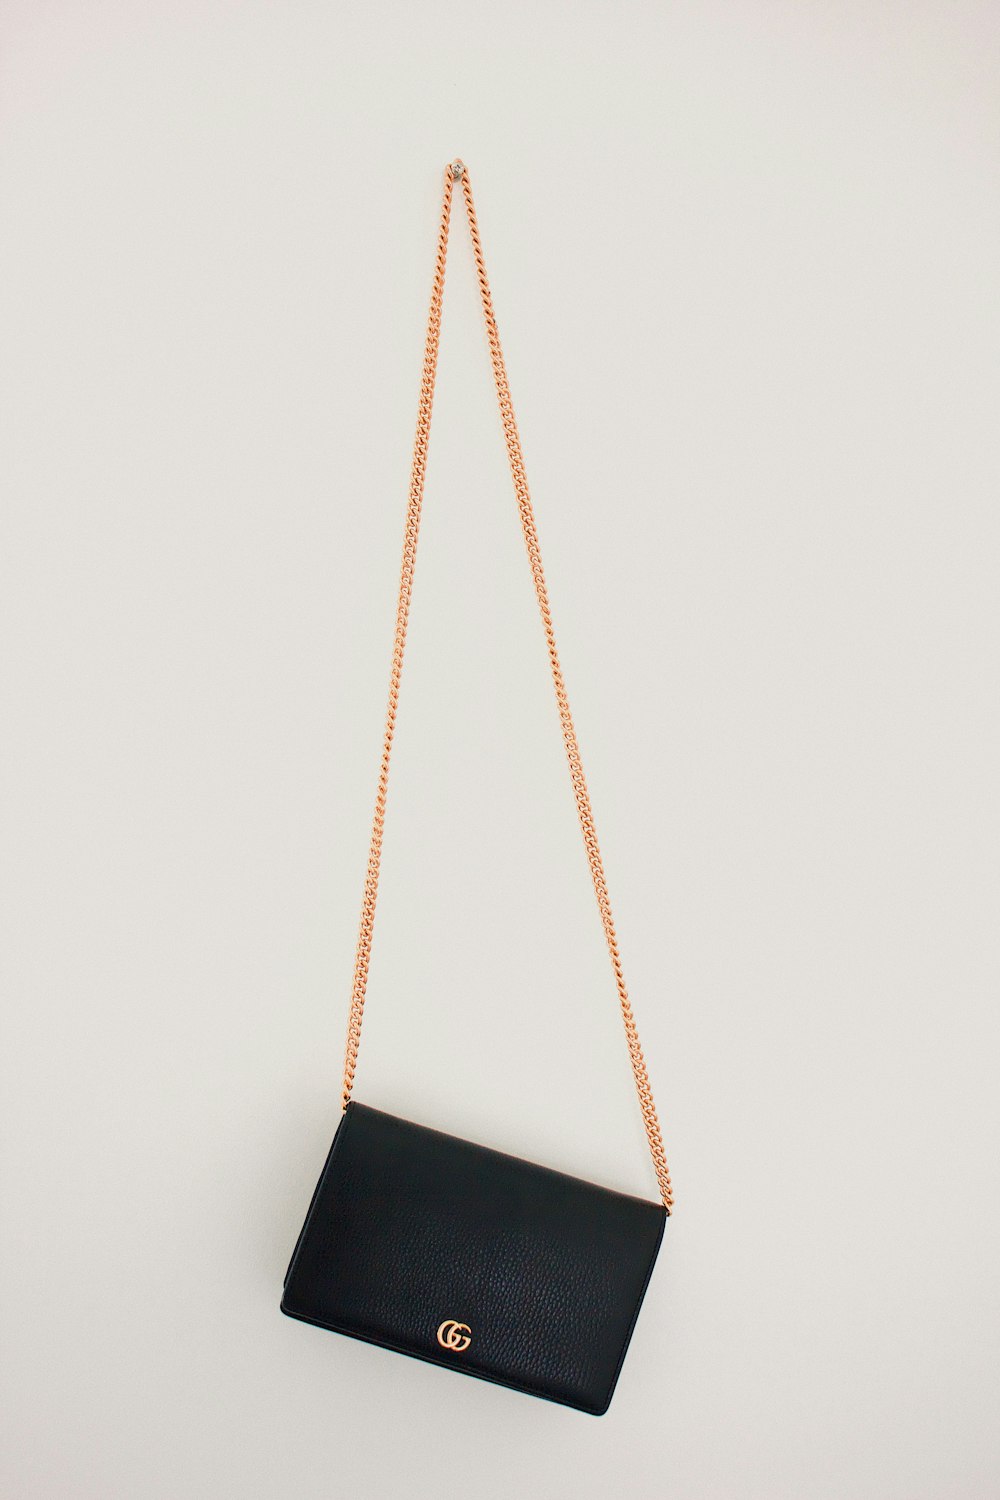 black Gucci leather crossbody bag photo – Free Fashion Image on Unsplash